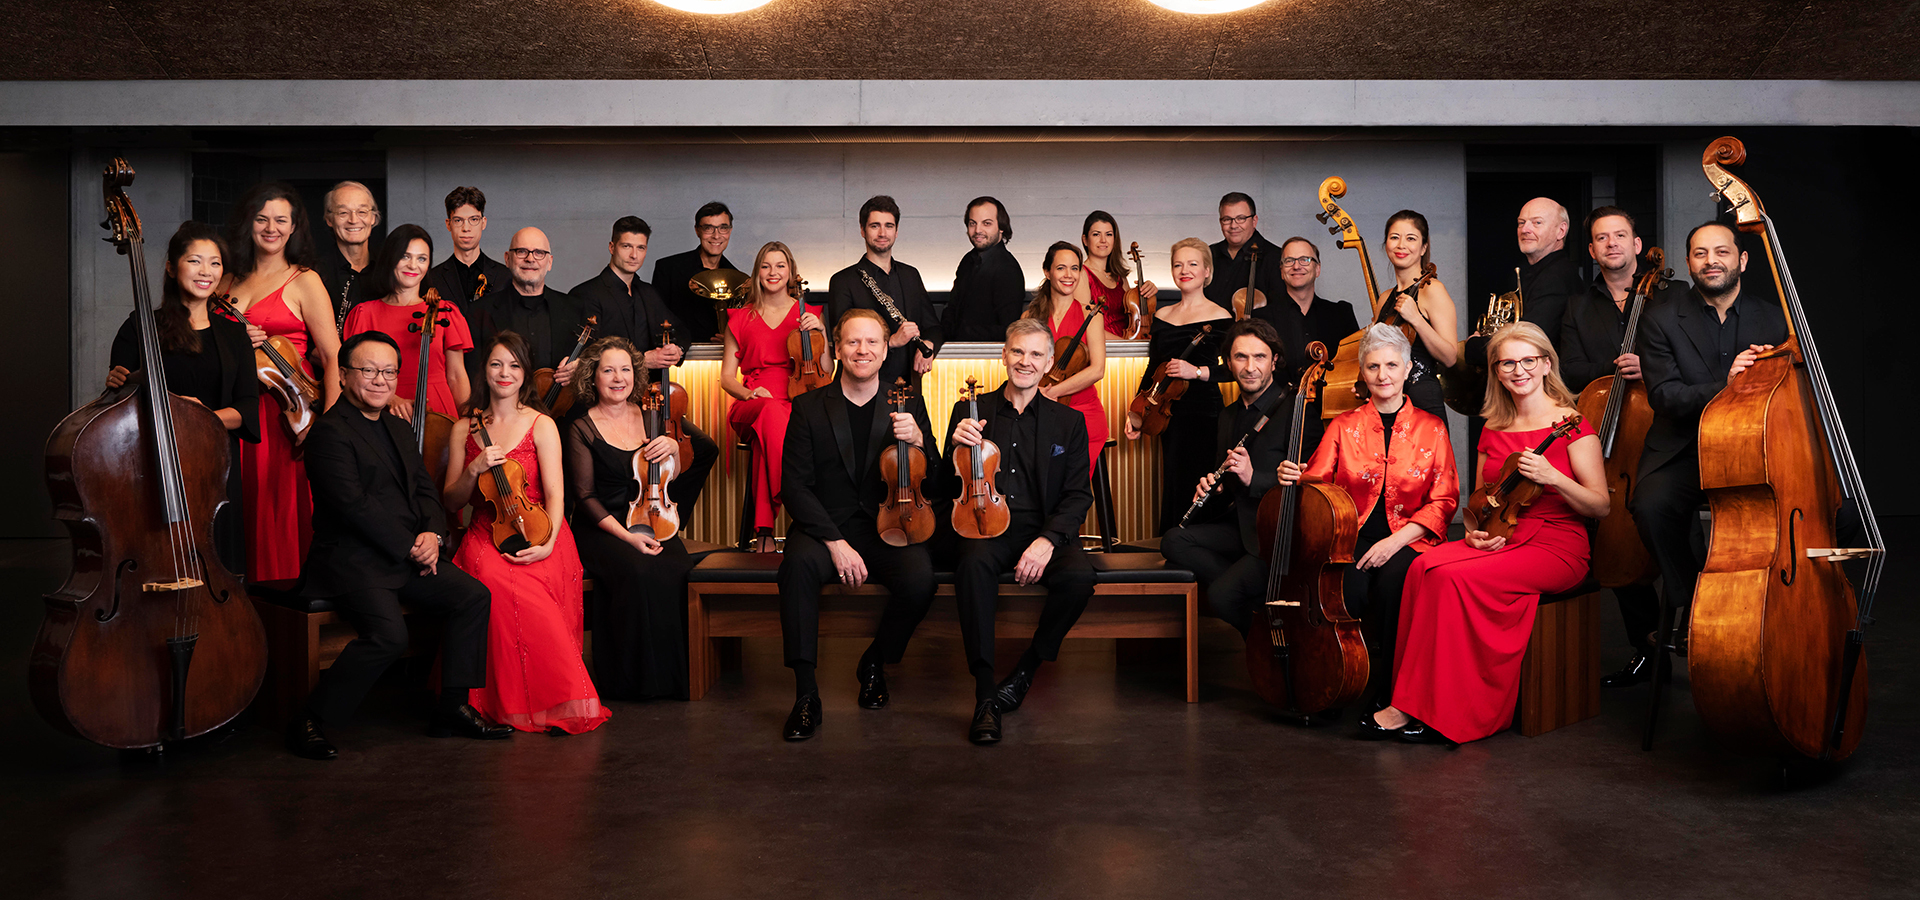 Zurich Chamber Orchestra group photo